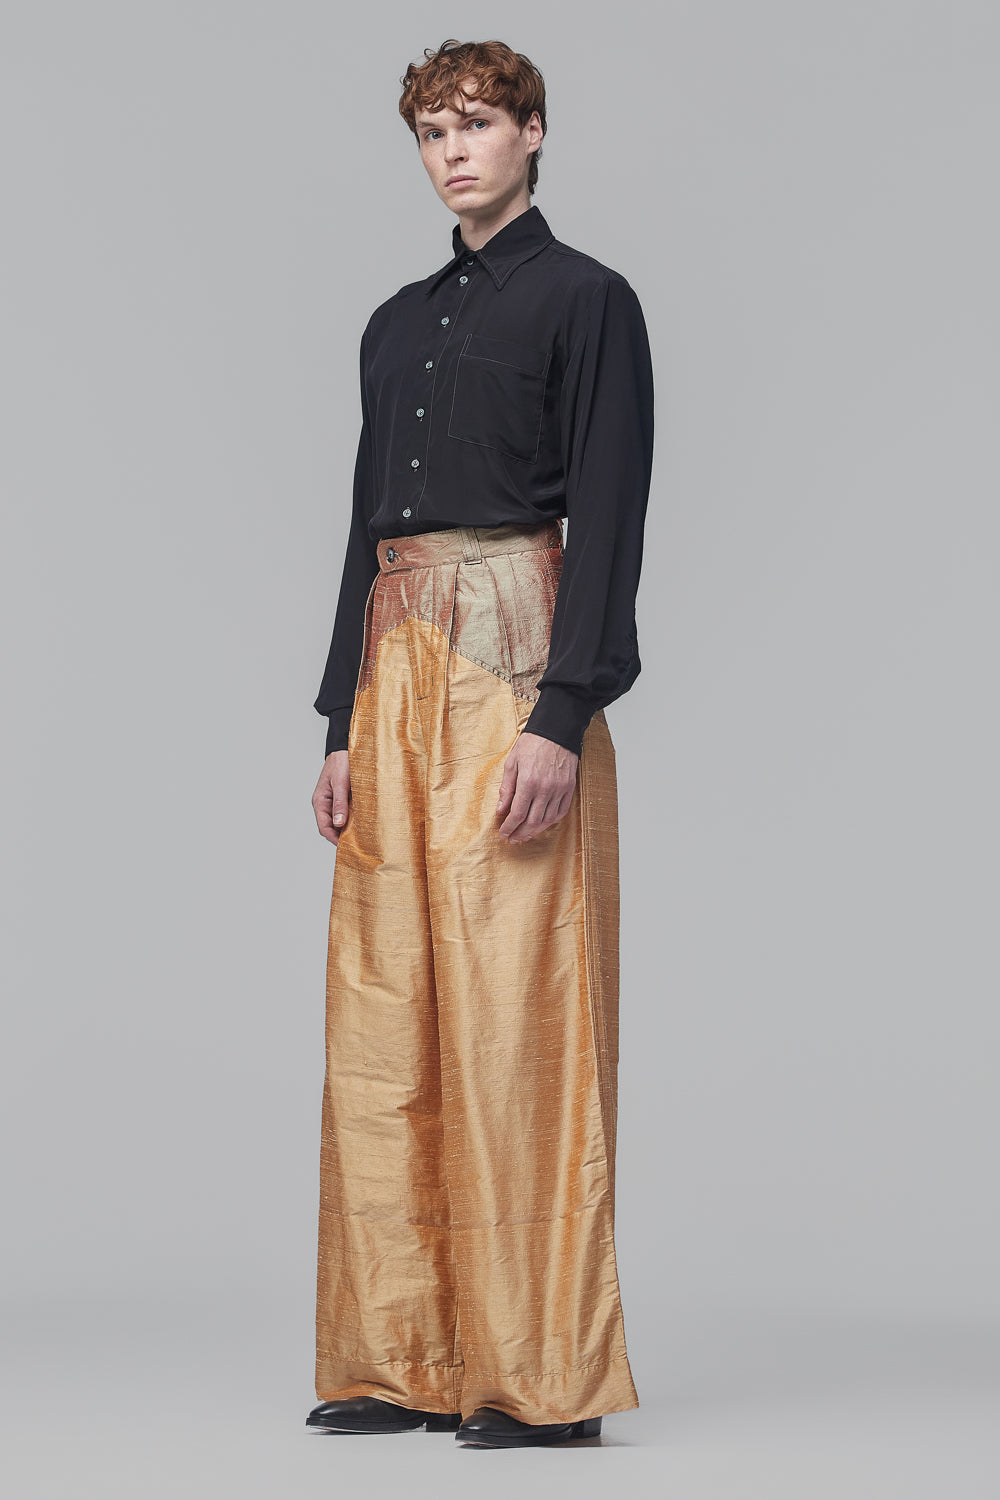 Pantalona com Pala Sinuosa em Shantungs de Seda Laranja-Claro e Changeant Menta e Goiaba